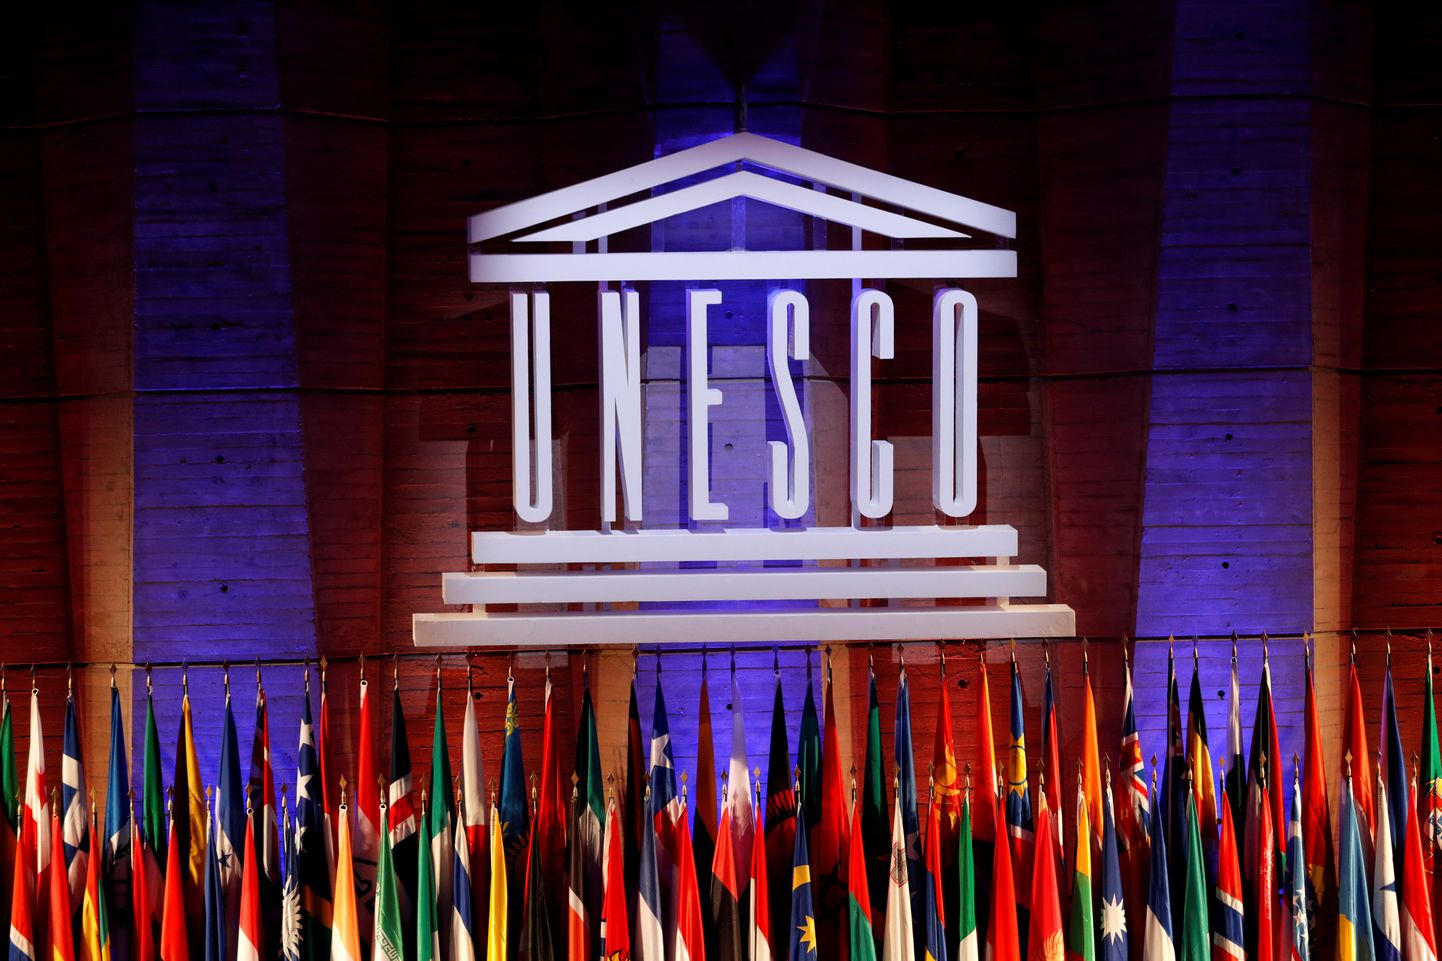 ÜRO kultuuriorganisatsiooni UNESCO logo. Foto on illustratiivne.